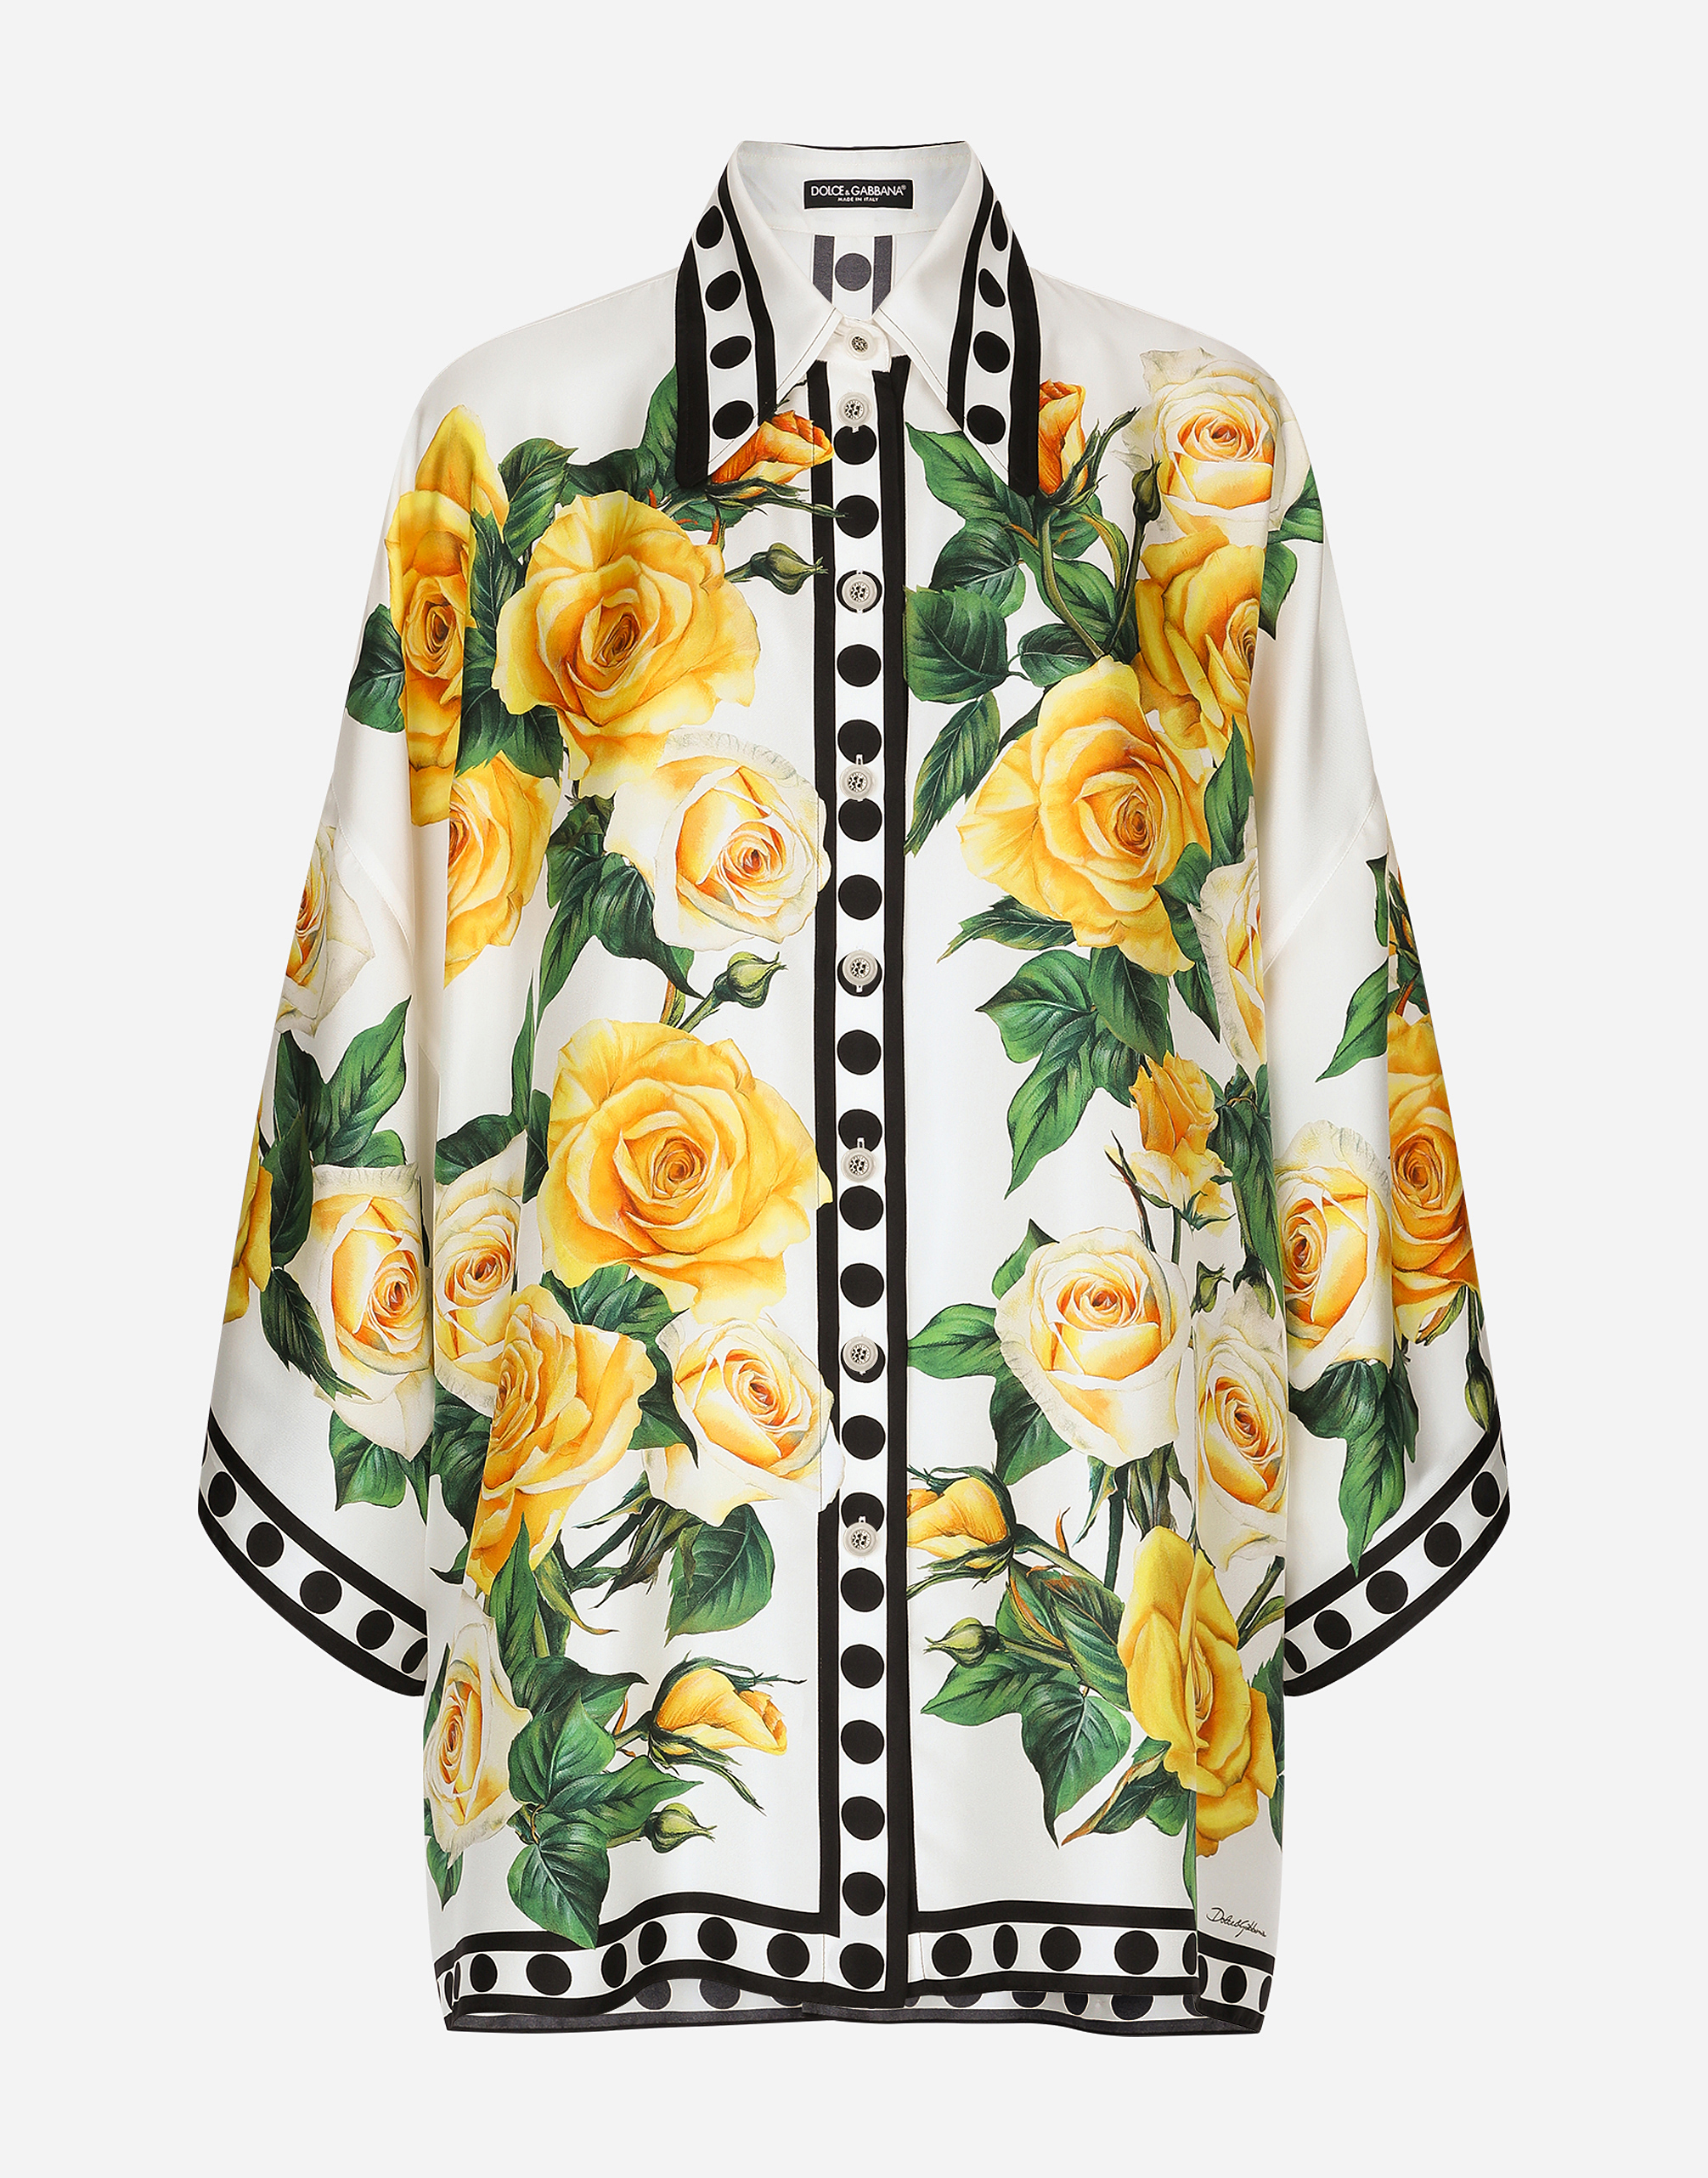 Oversize silk shirt with yellow rose print